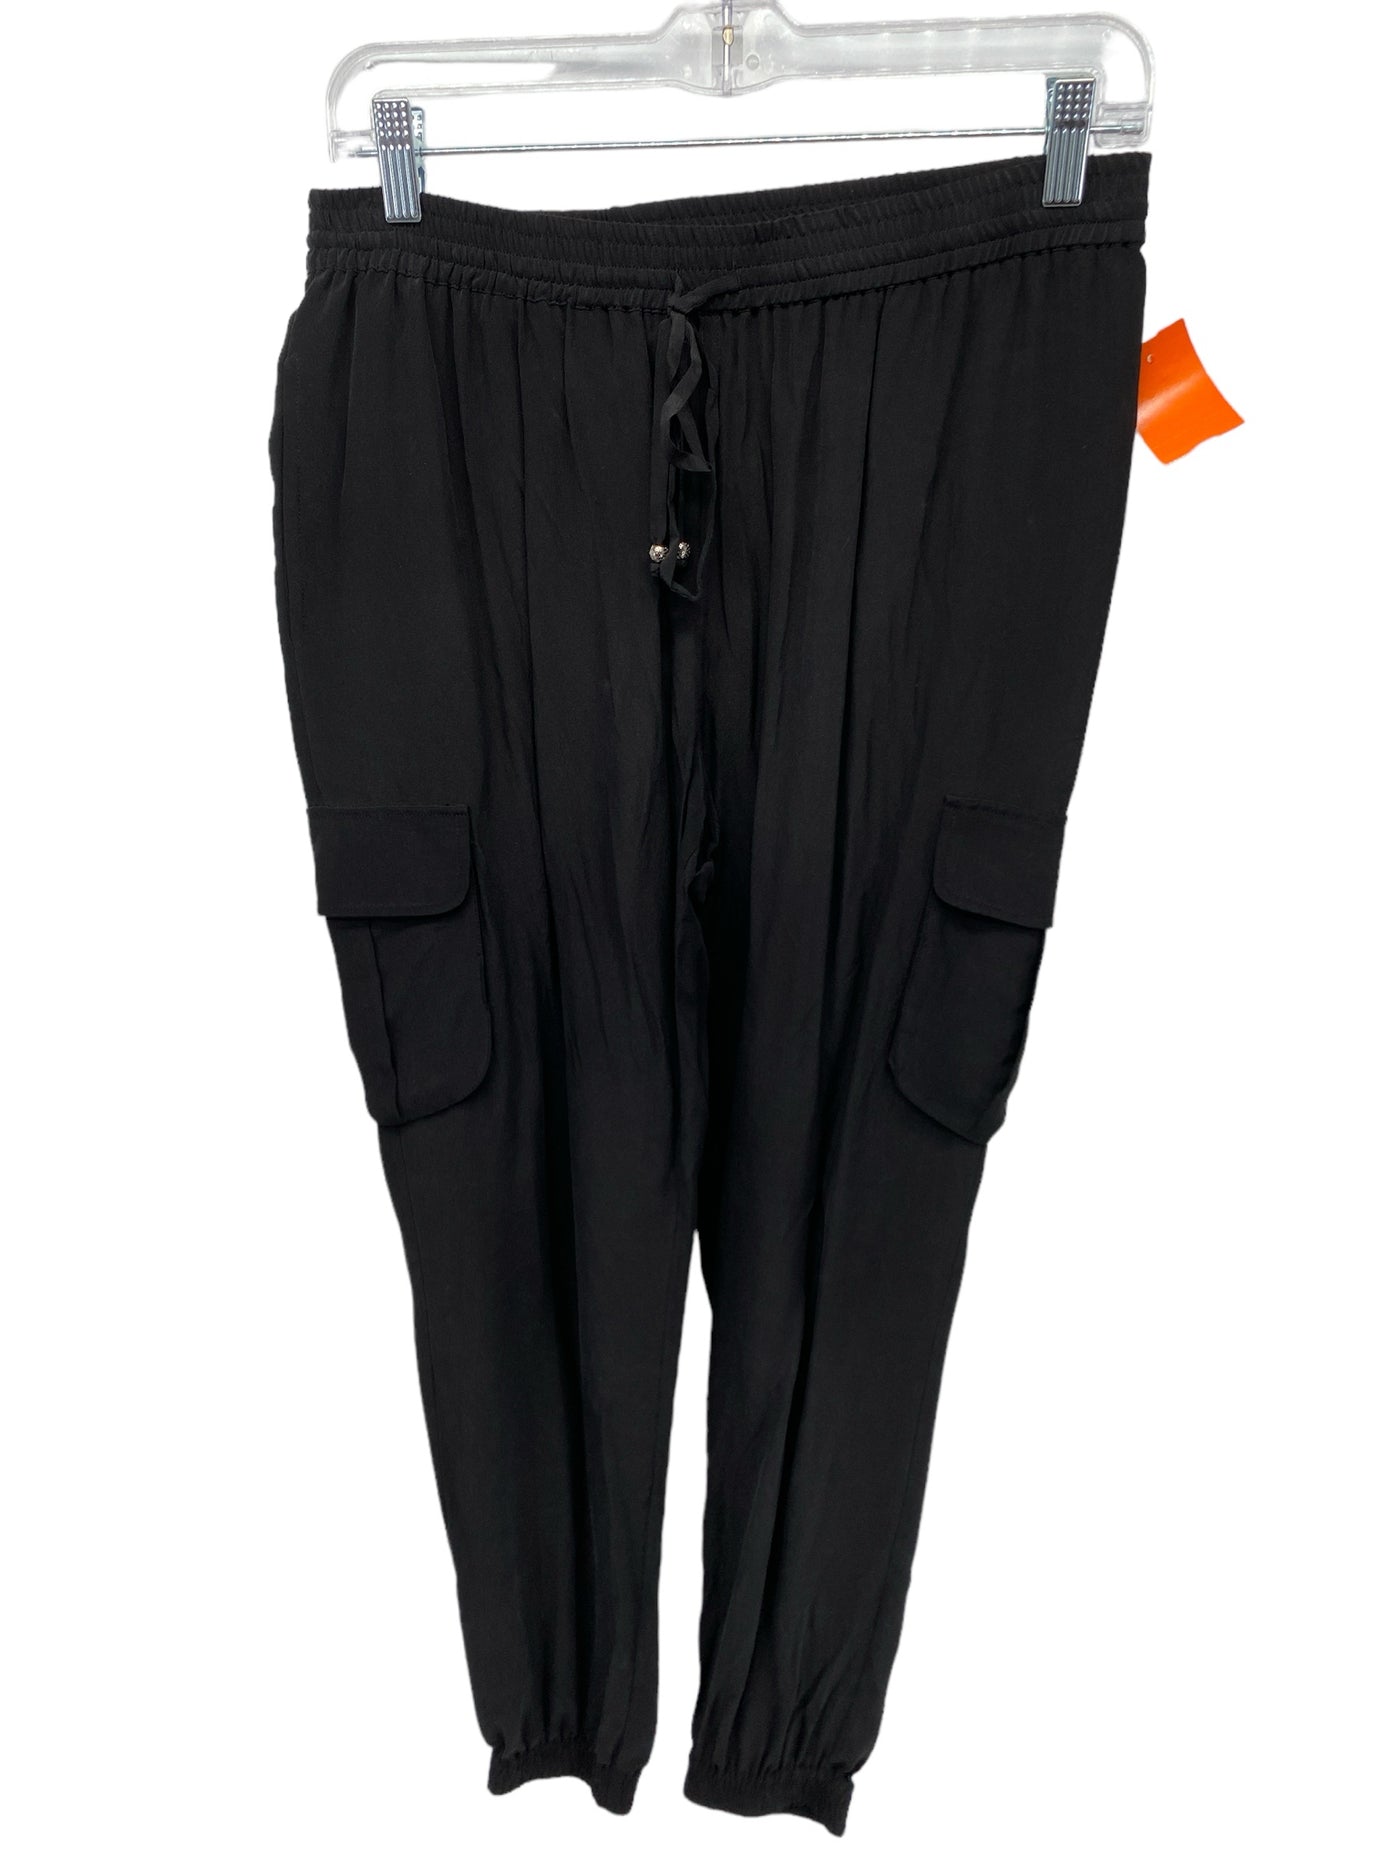 Cynthia Rowley Misses Size 4 Black Pants